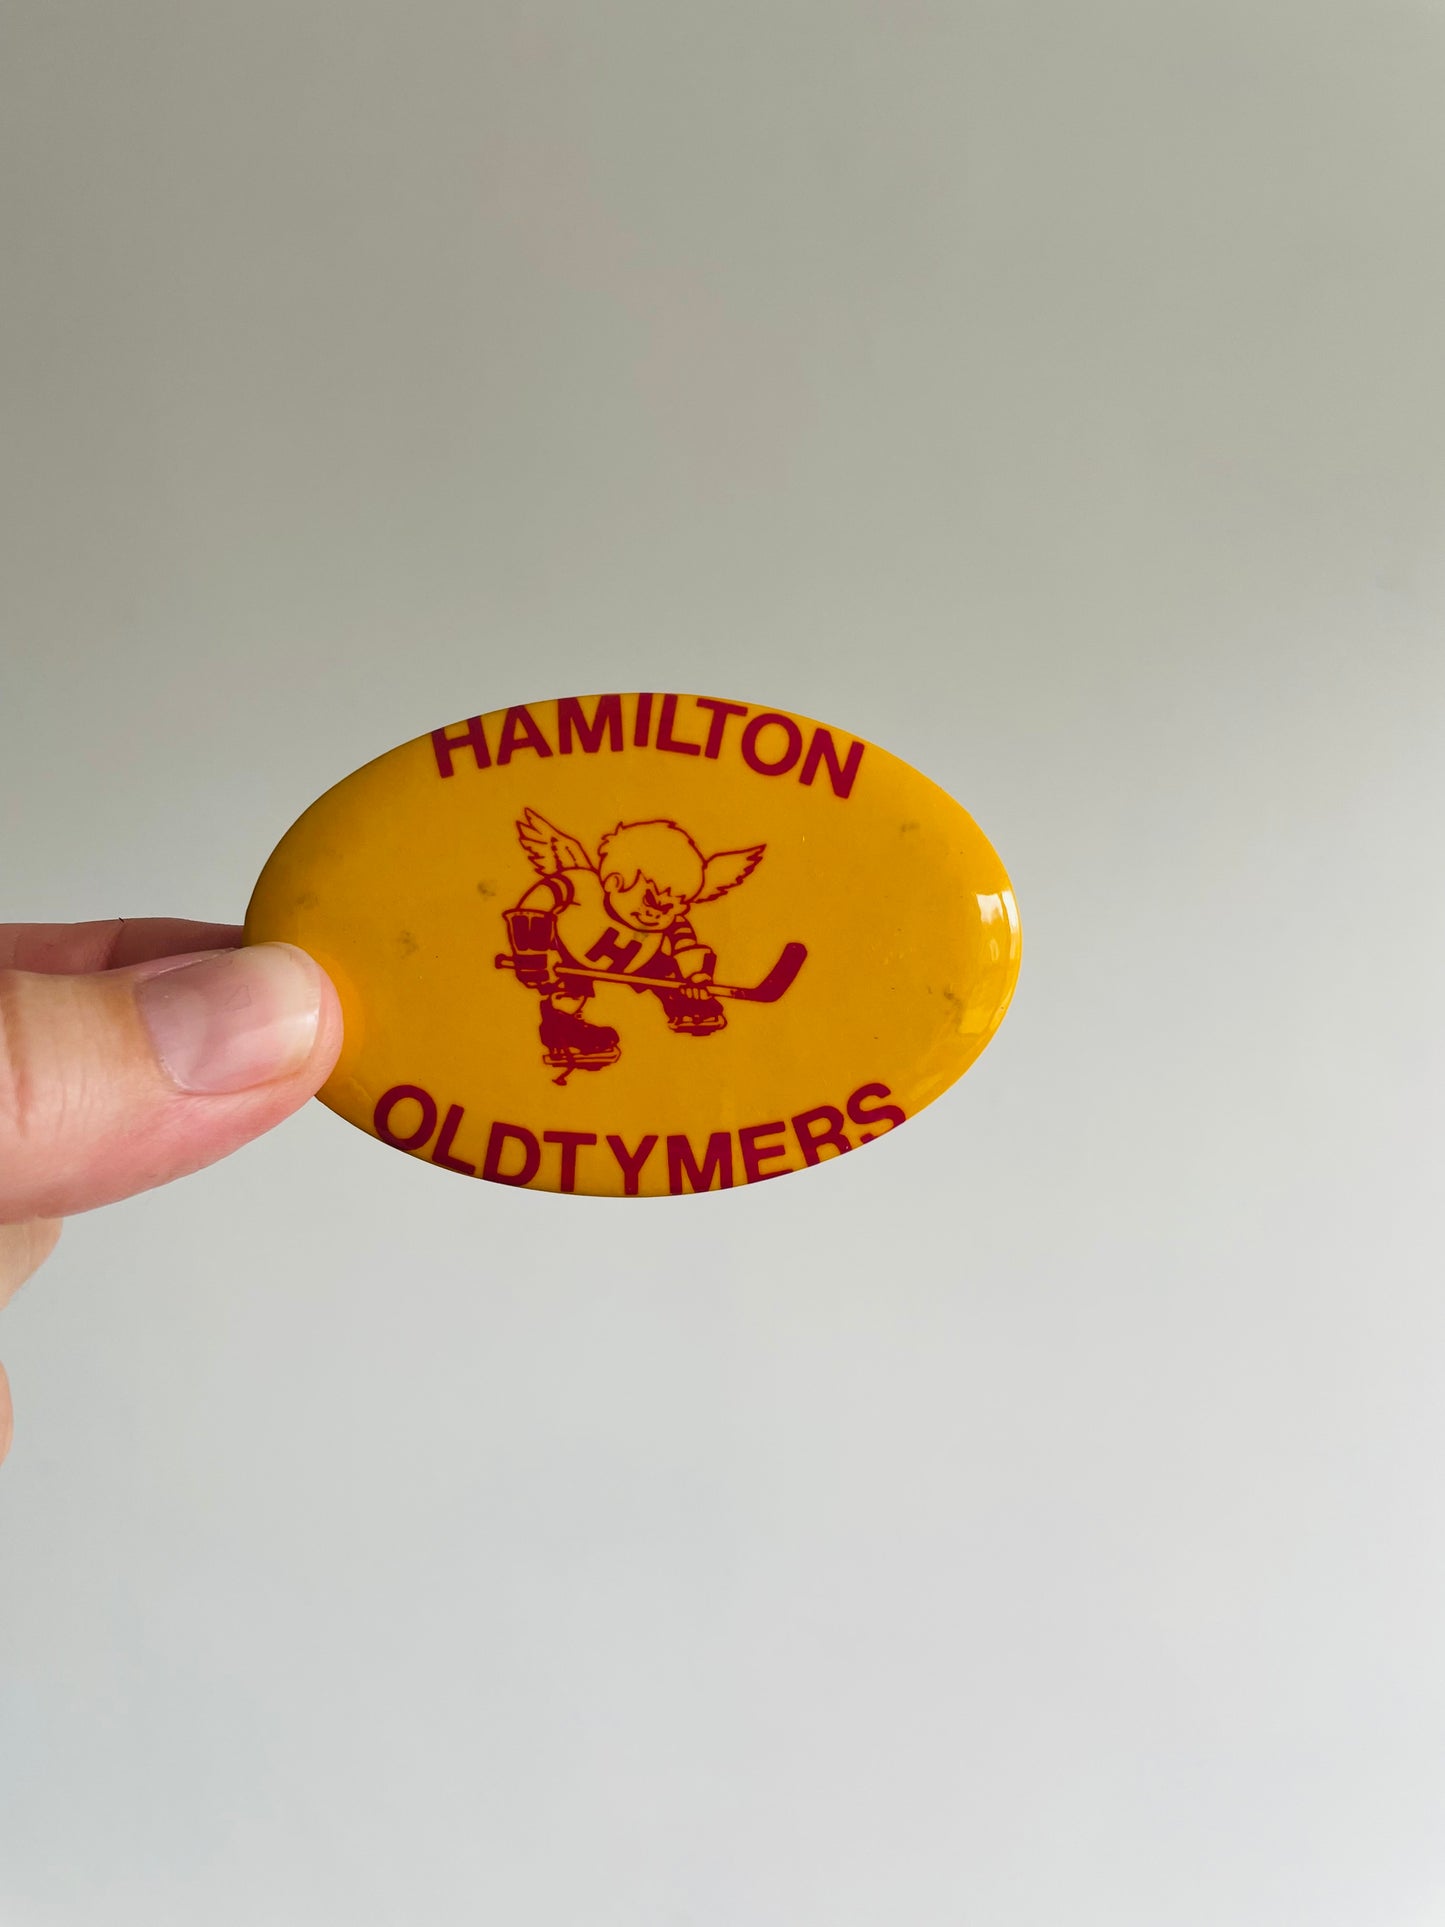 Vintage Metal Hockey Button Pin - Hamilton Oldtymers - Yellow Oval #2